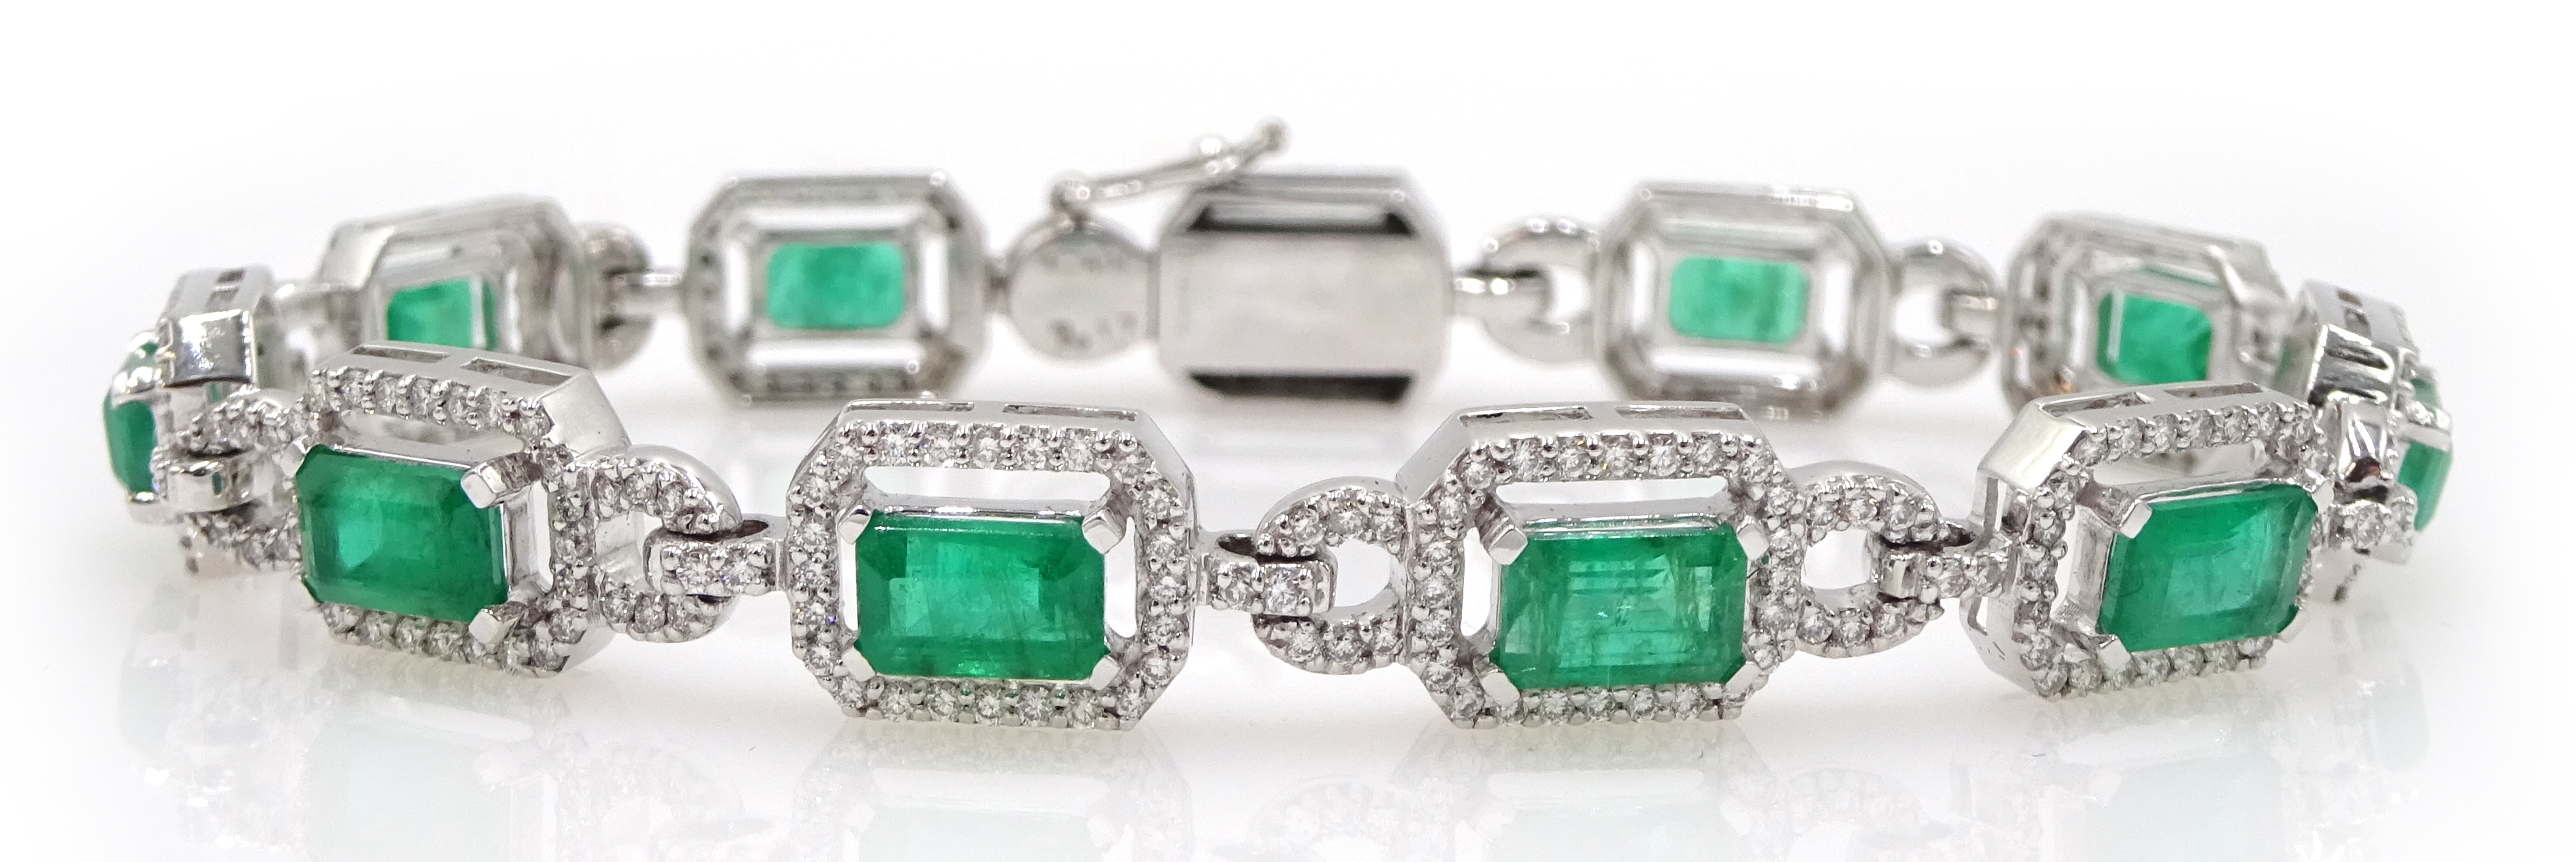 18ct white gold emerald cut emerald and round brilliant cut diamond bracelet, hallmarked,